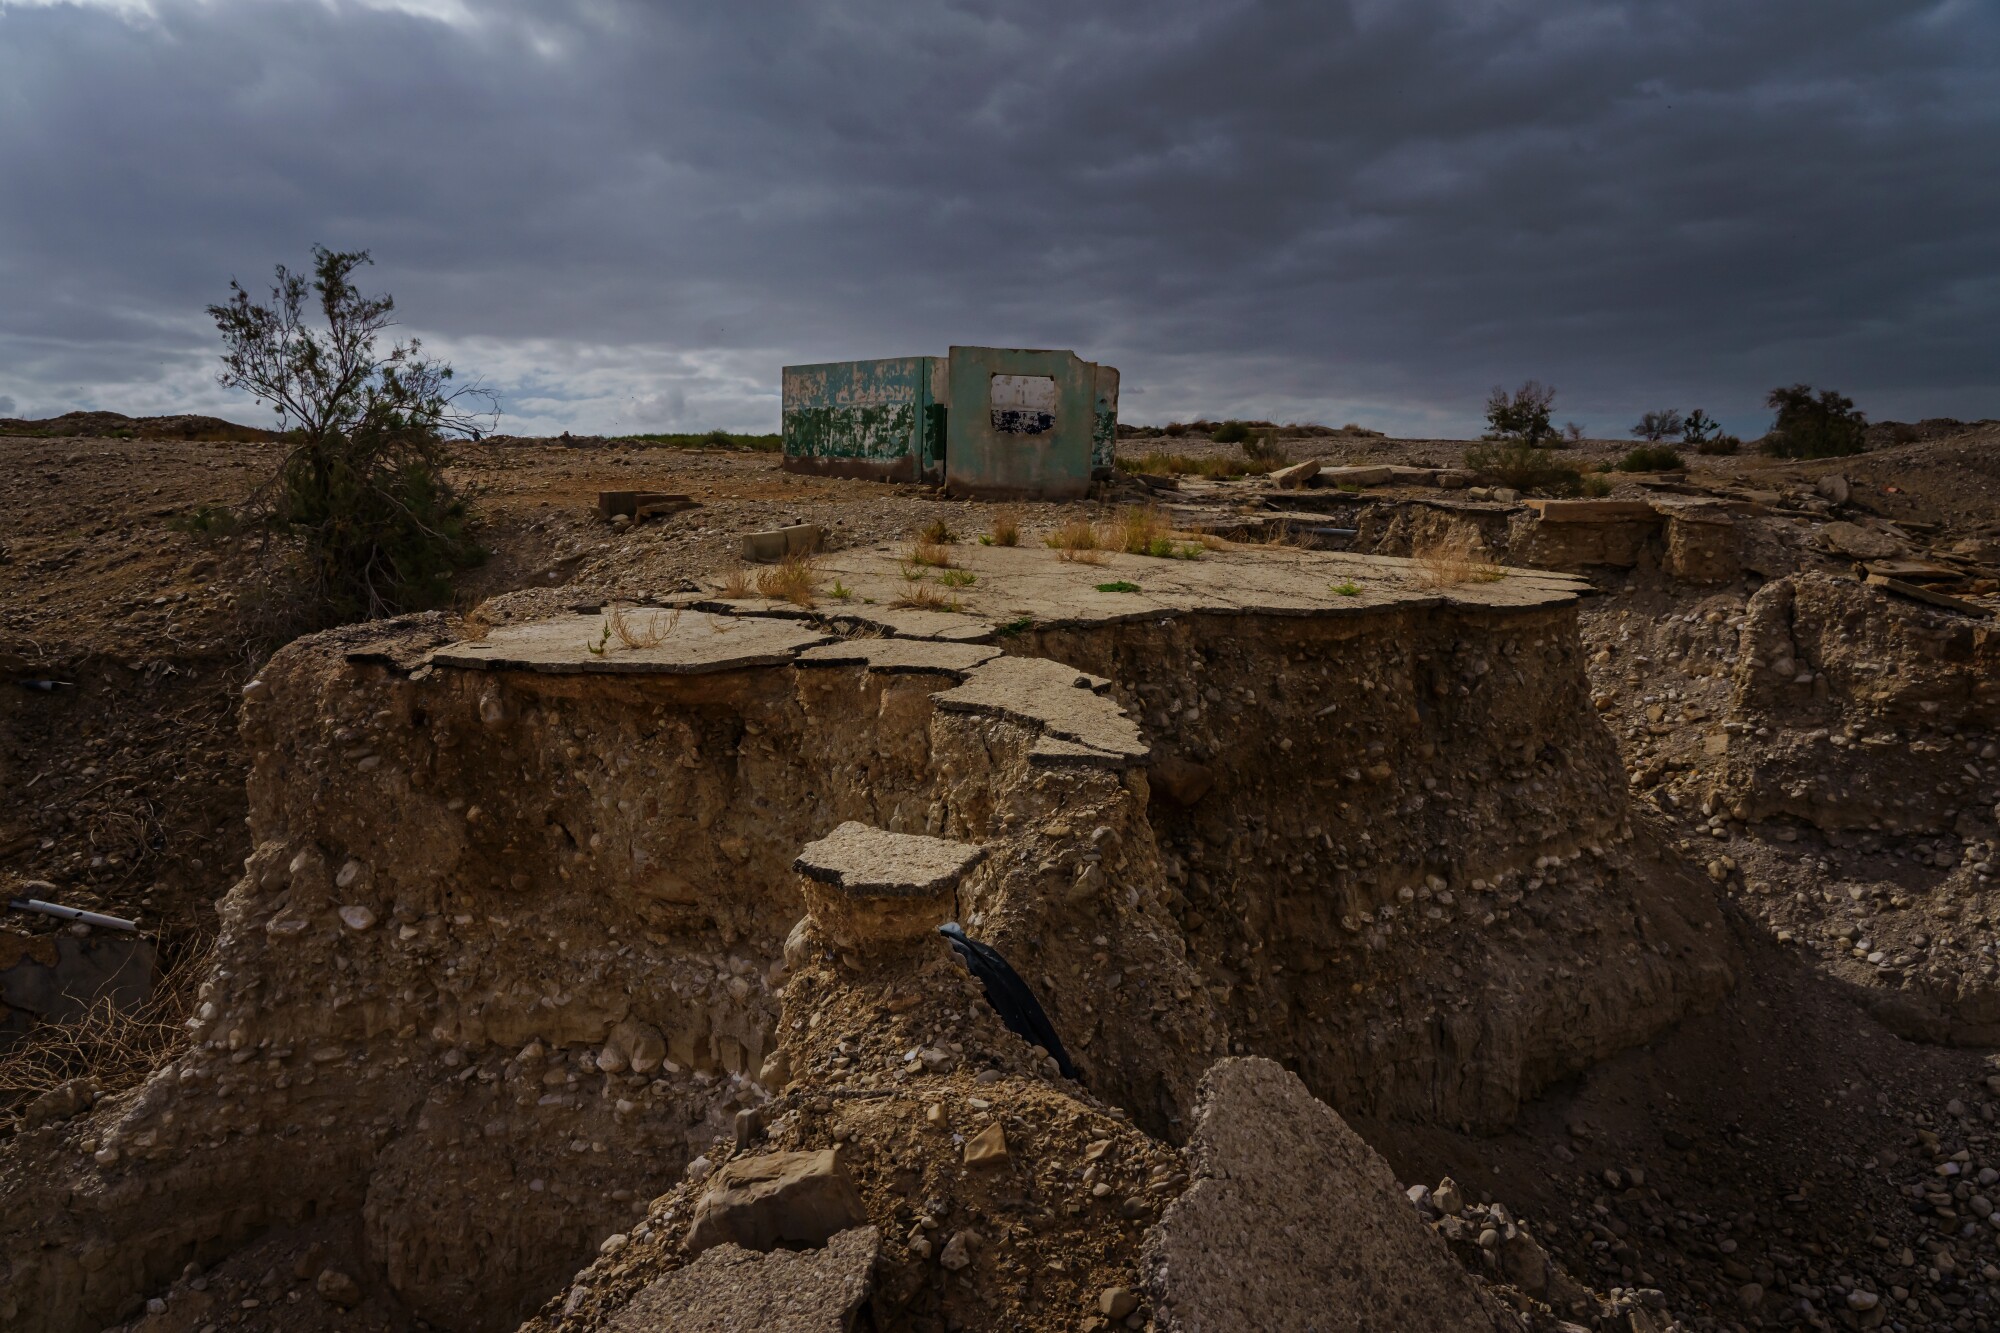 A sinkhole in the desert.